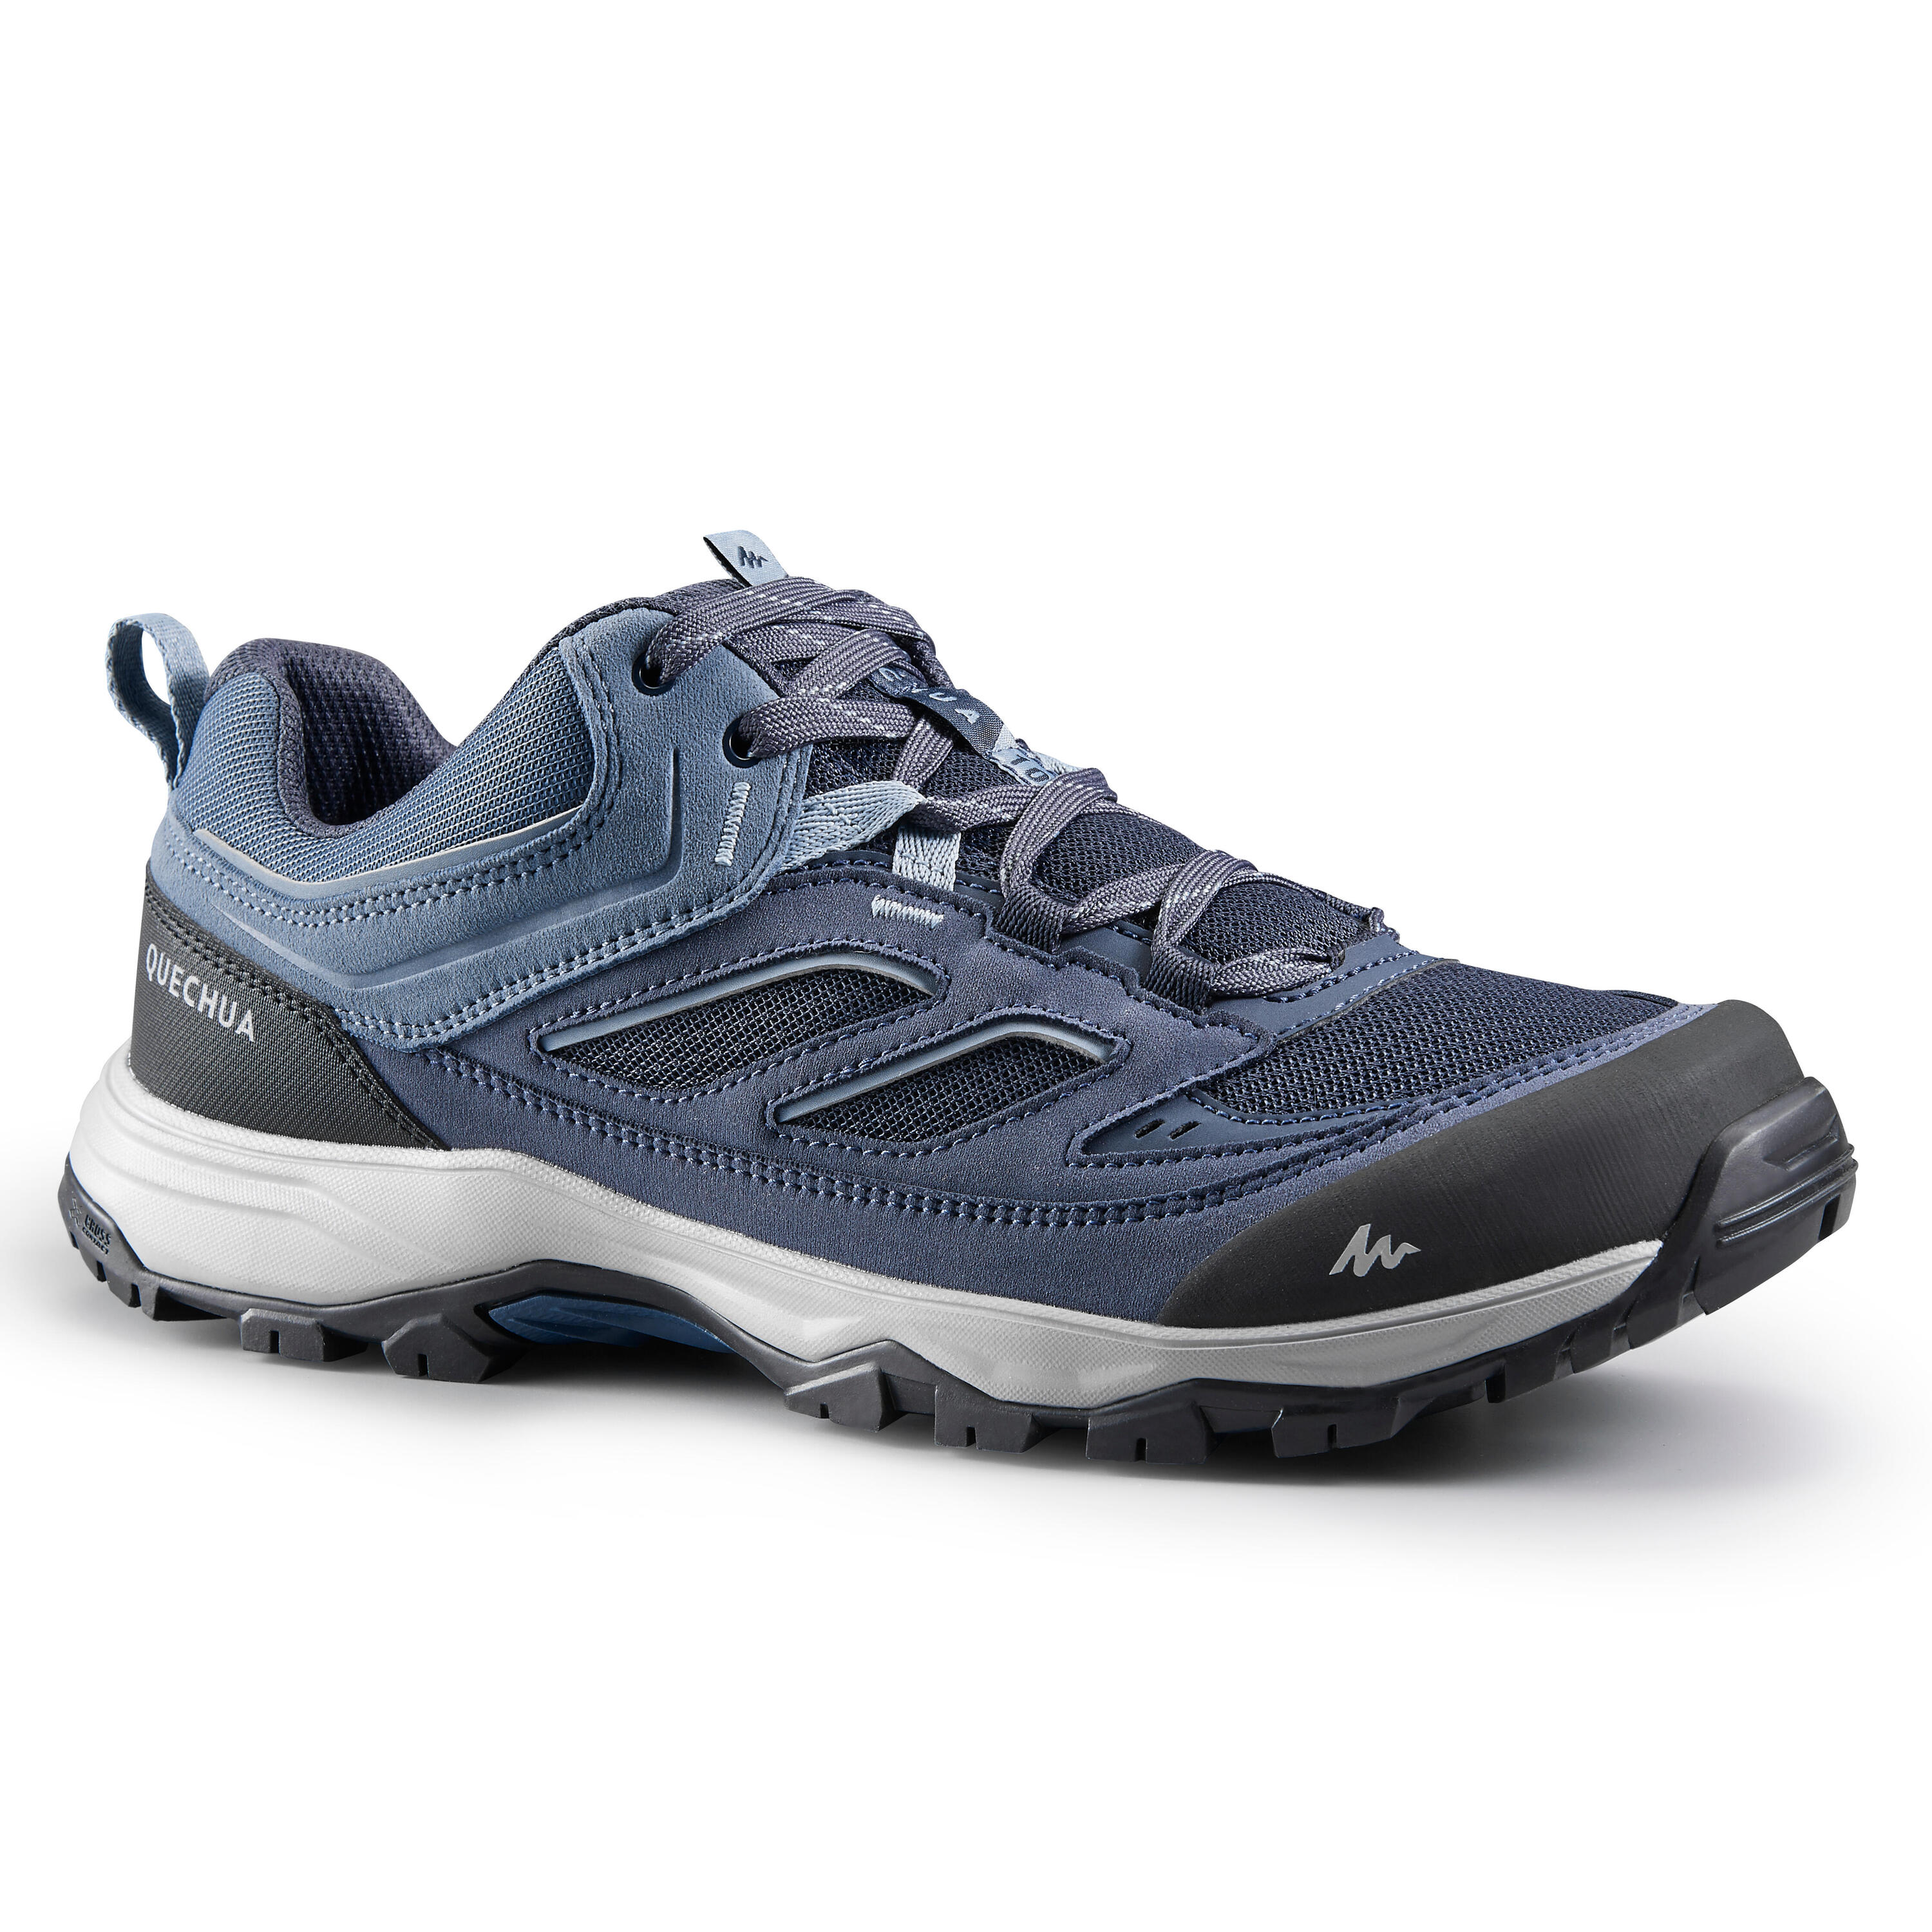 QUECHUA Men's mountain hiking shoes - MH100 - Blue 